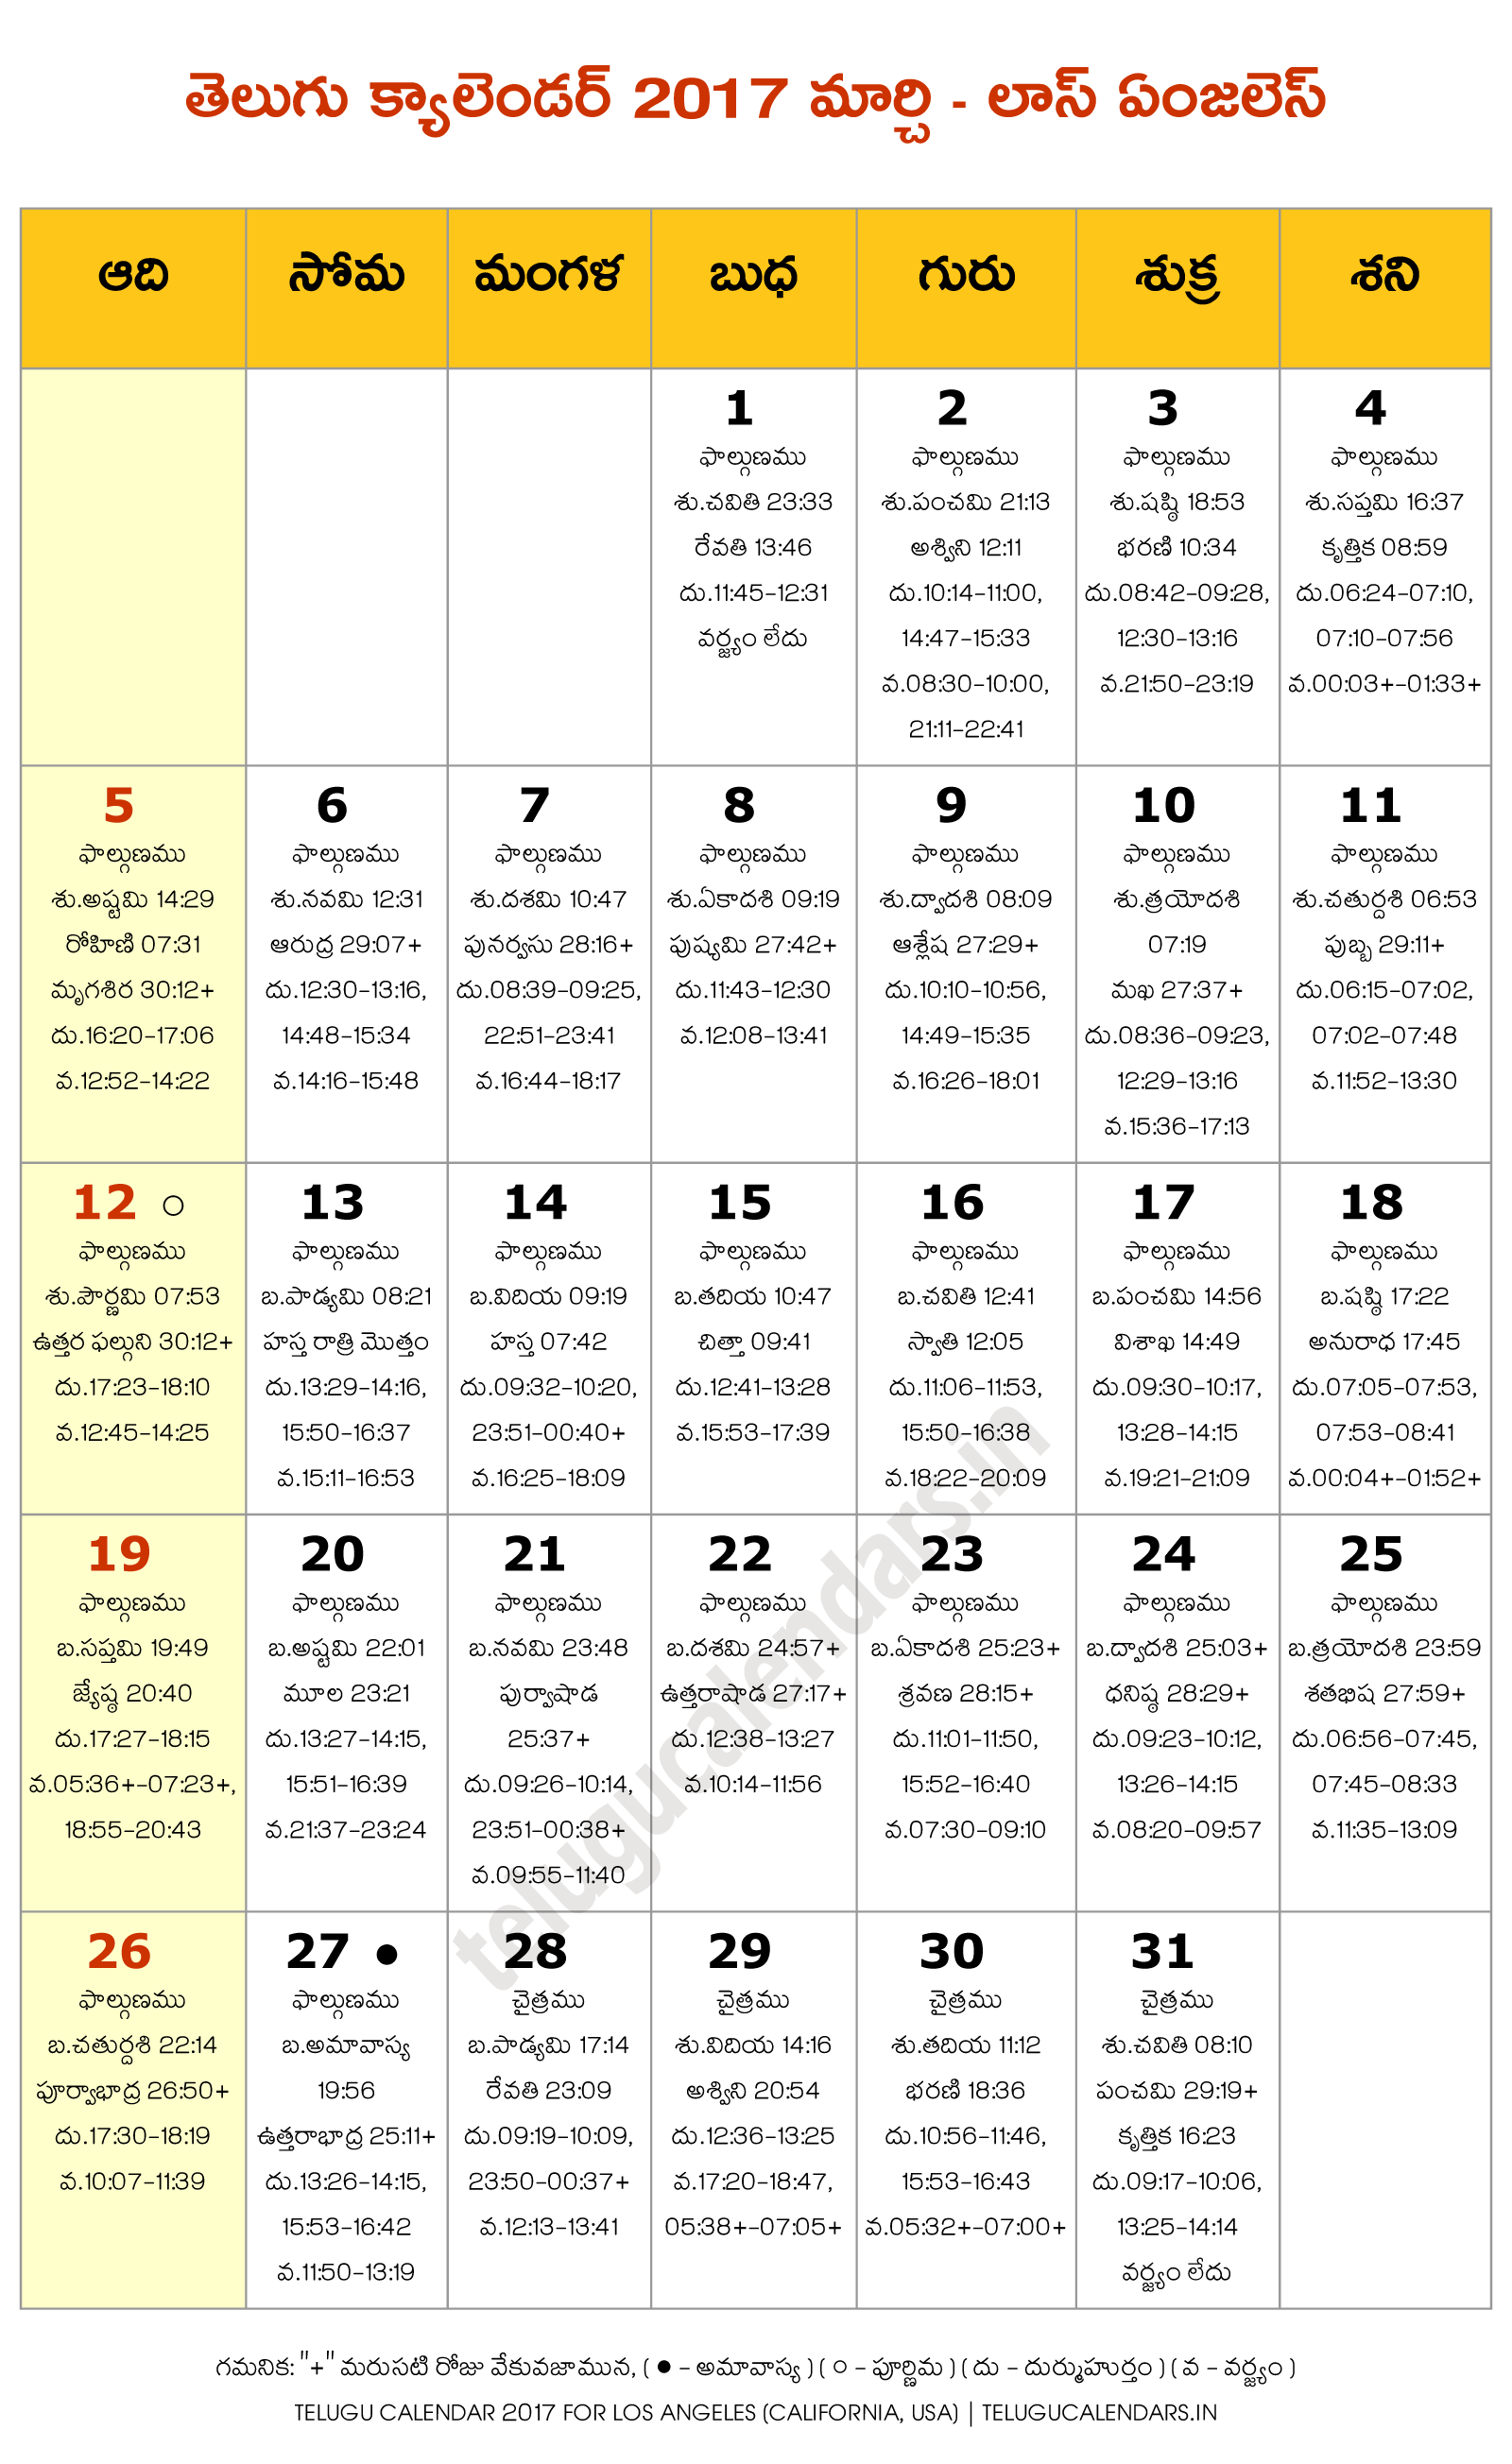 Los Angeles 2017 March Telugu Calendar | Telugu Calendars